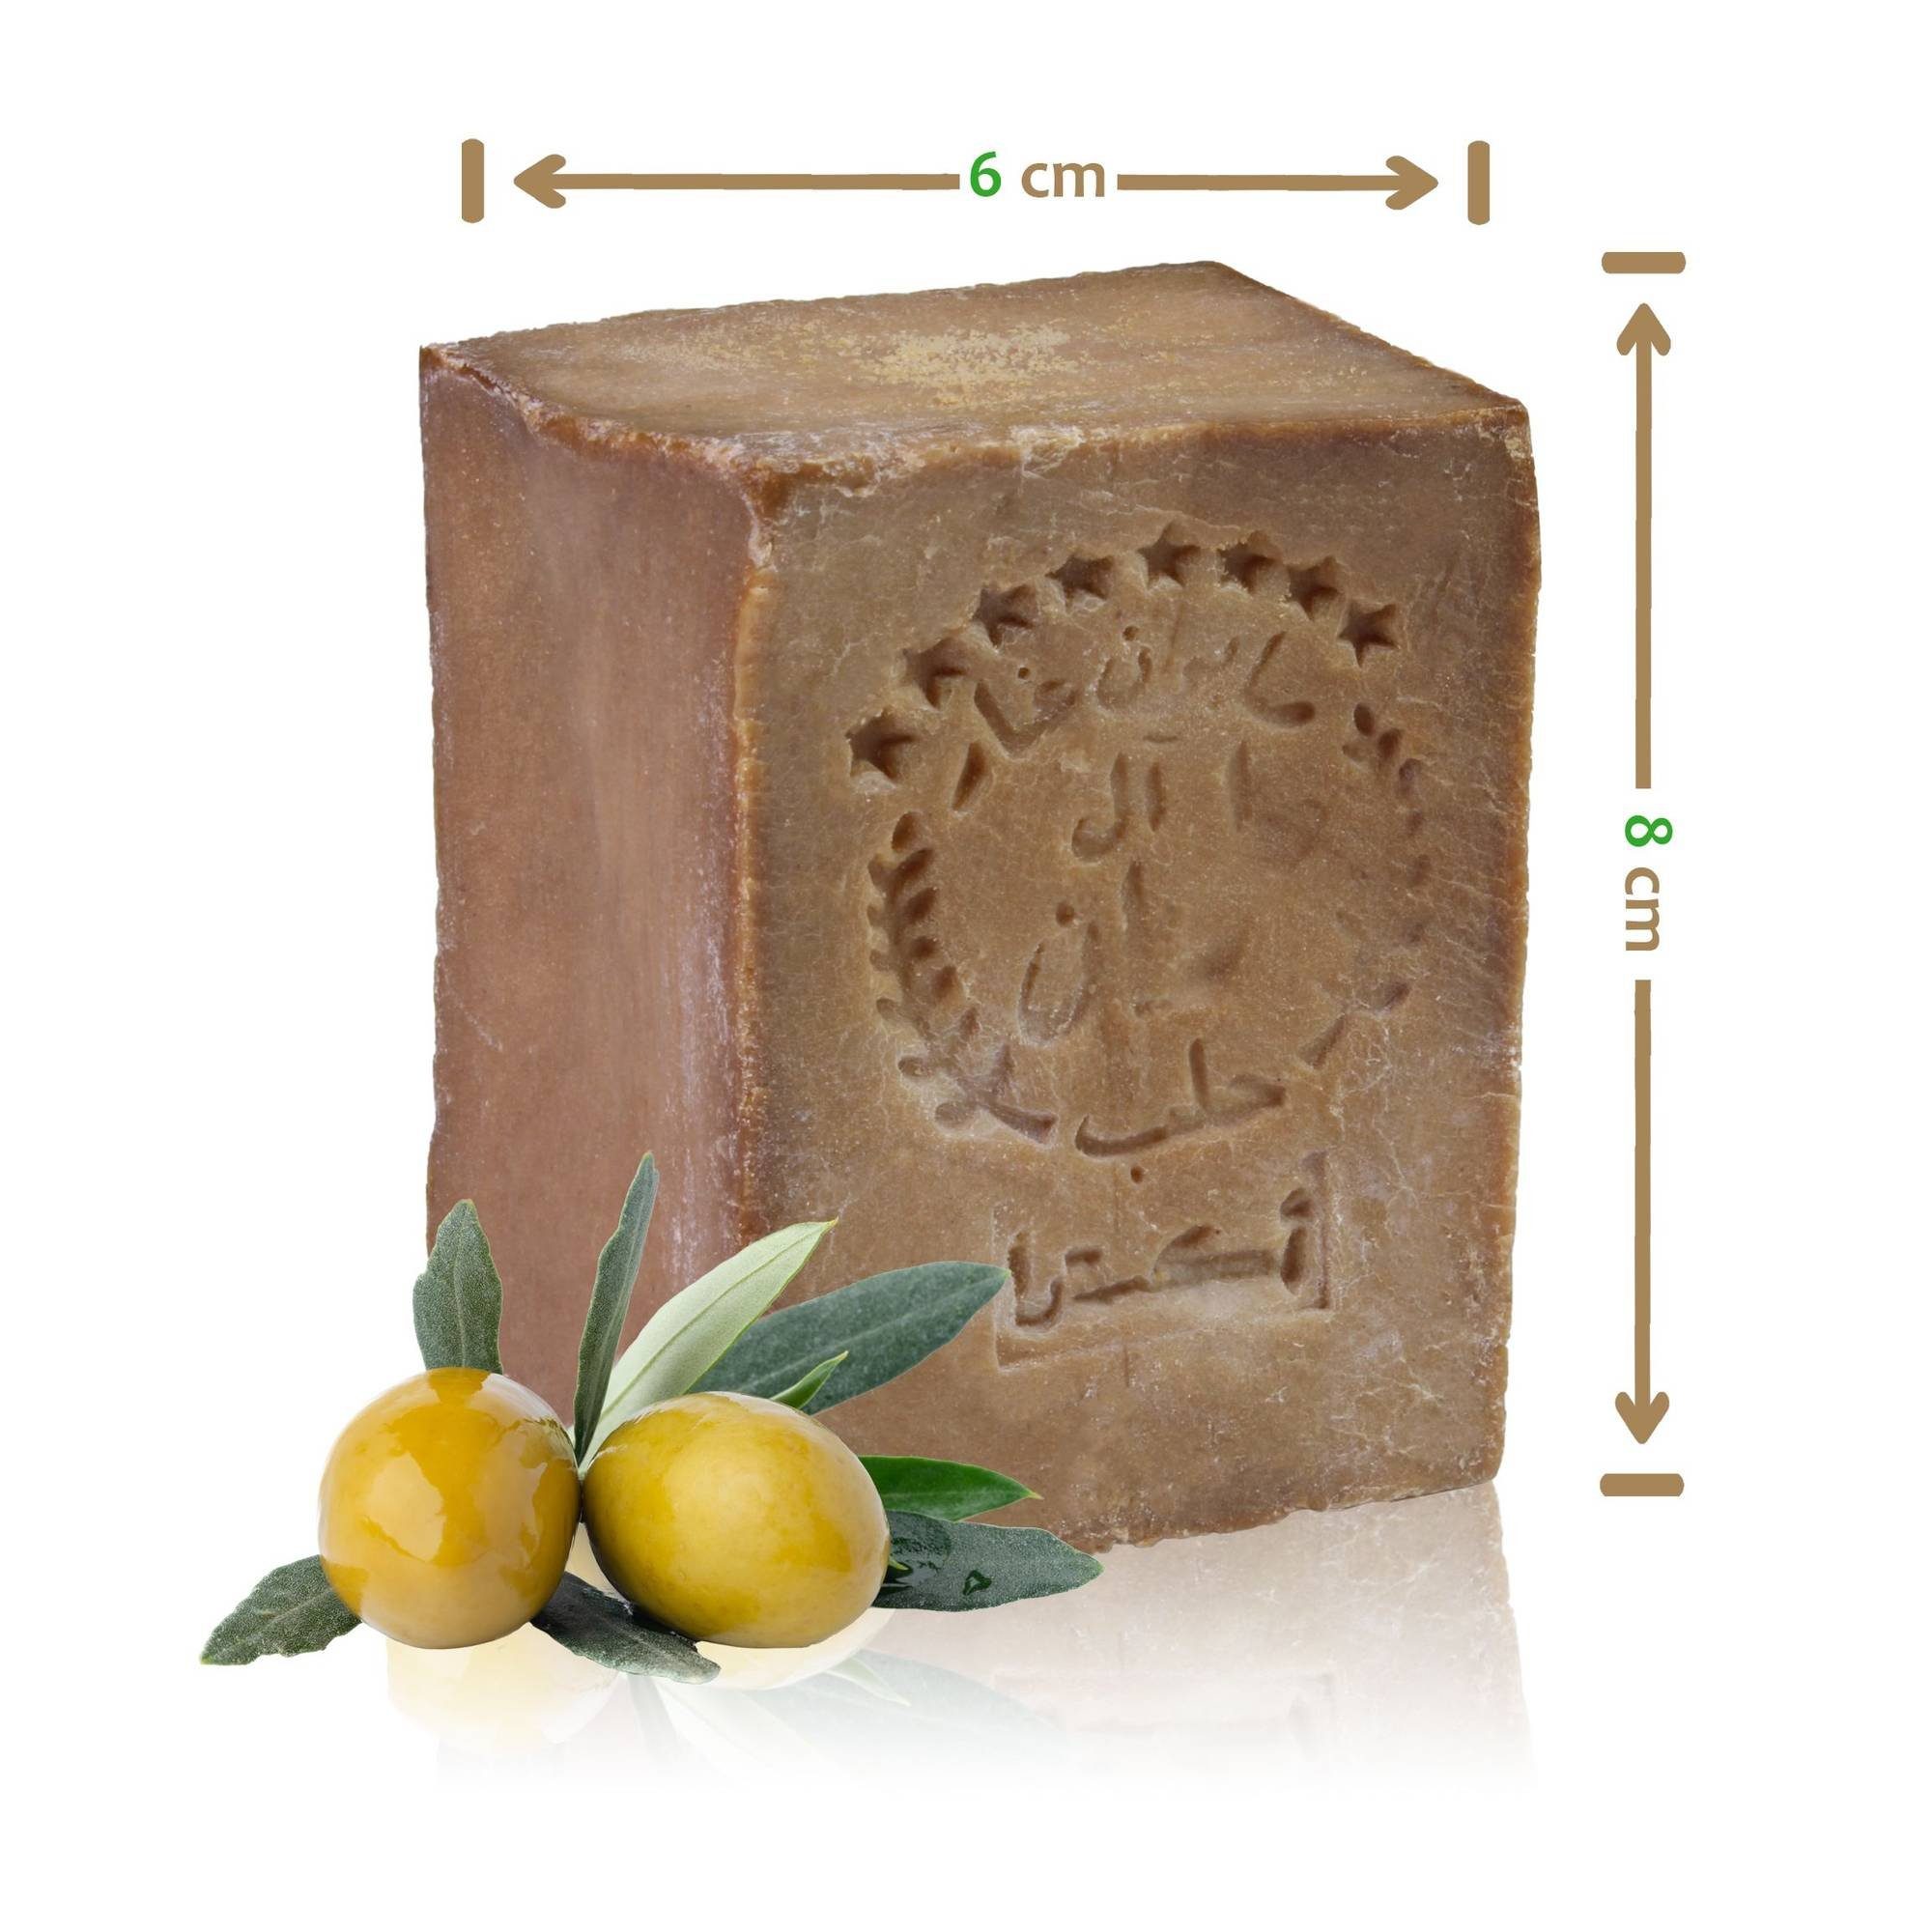 Olivenöl 95% Feste 5% Tumelo 2x 200g, Aleppo Naturseife 95-tlg. Lorbeeröl, Original Duschseife Seife